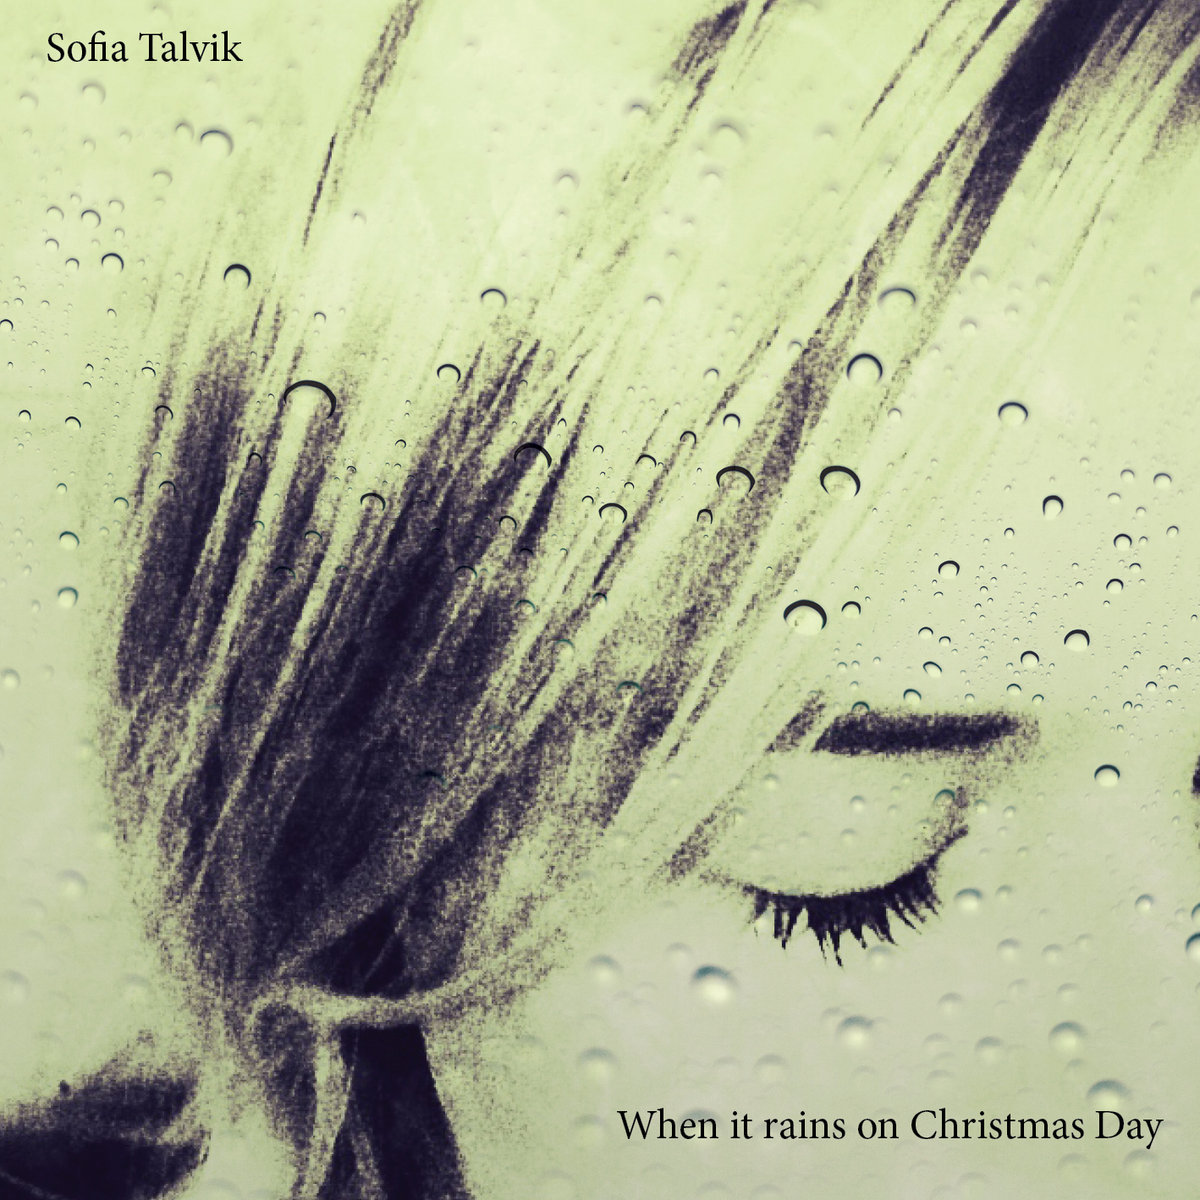 Sofia Talvik - When it rains on Christmas day